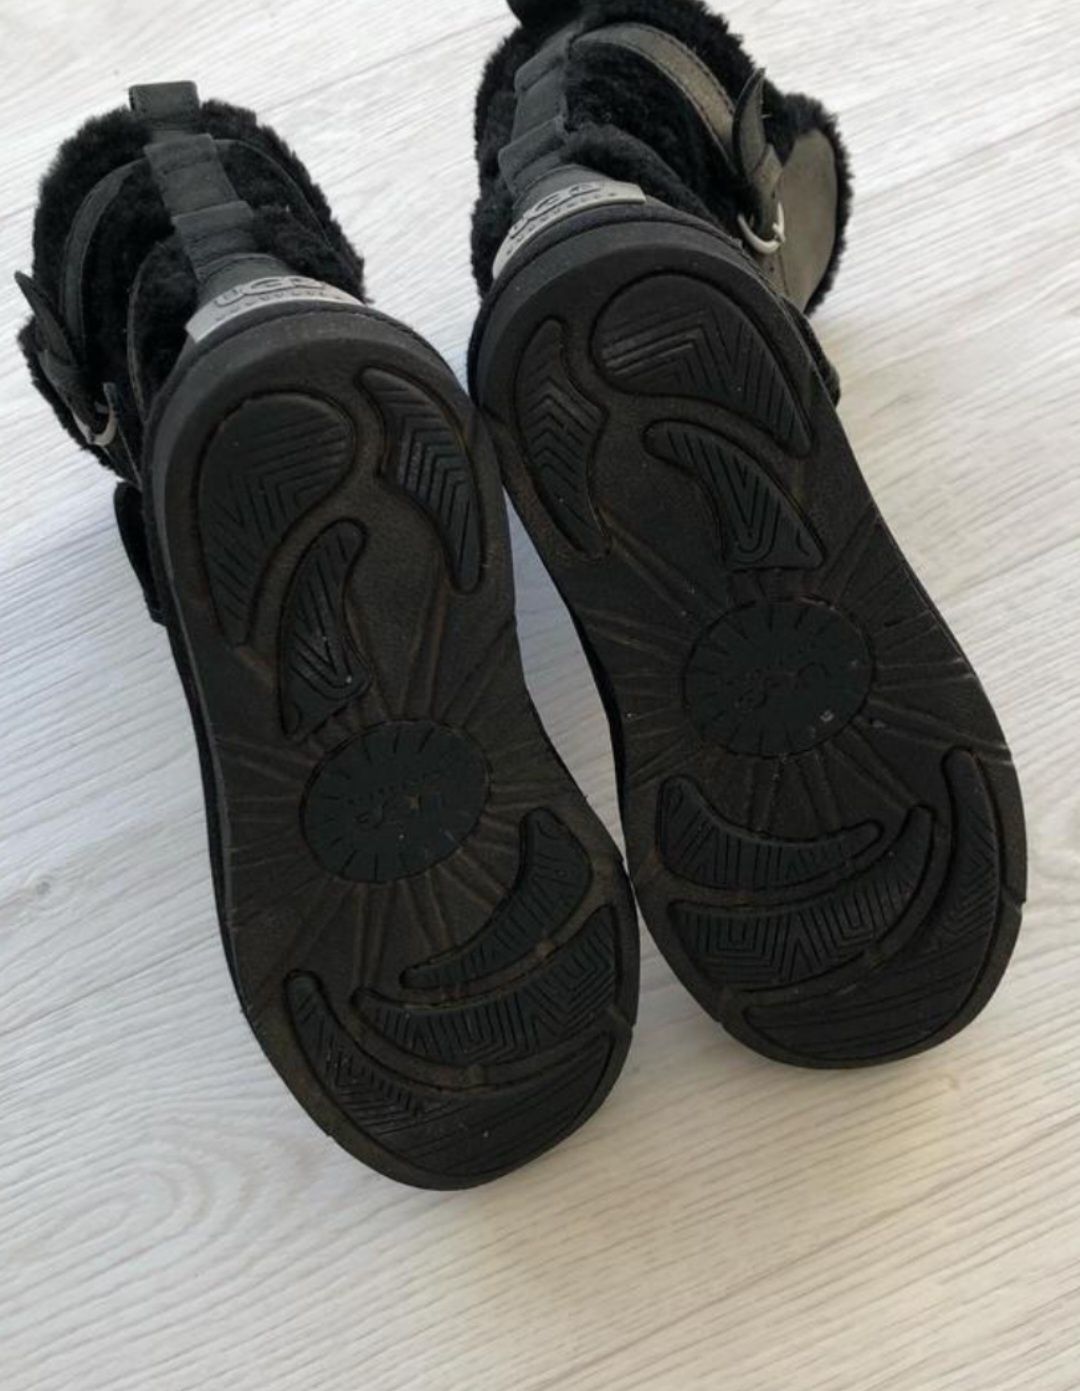 Ugg Australia Women’s Becket Leather Boot Black